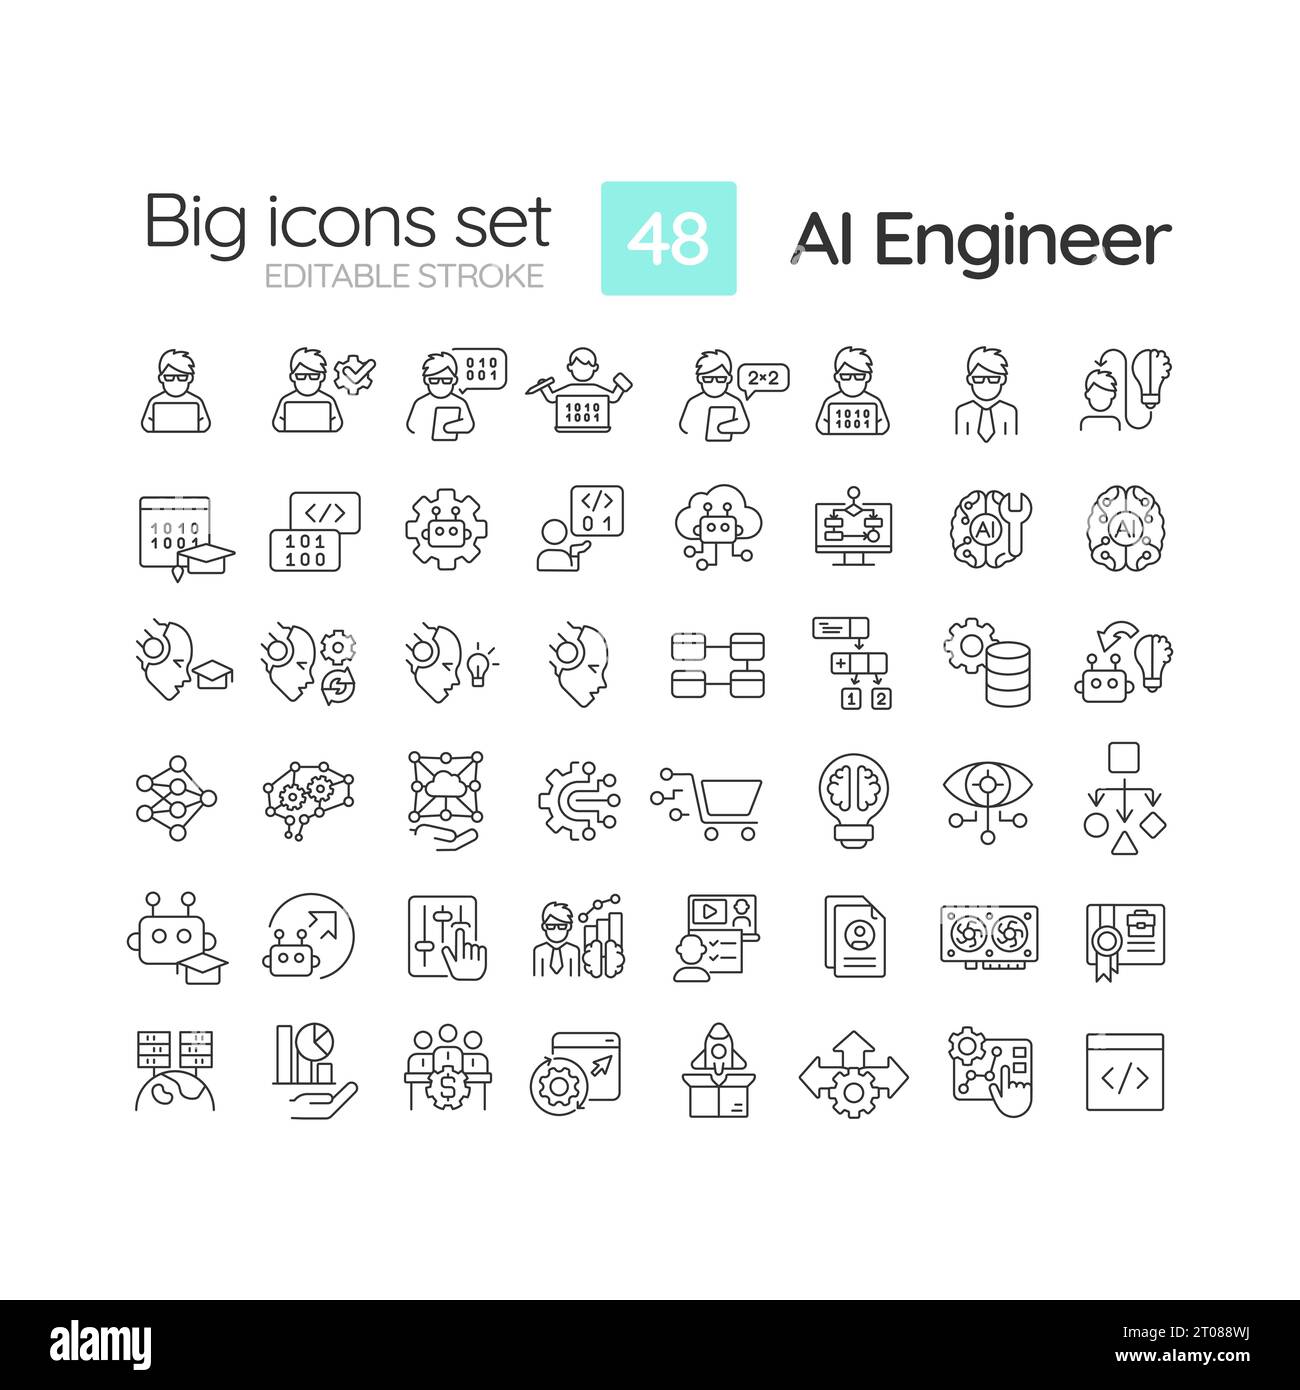 Editable black big icons for representing AI engineer Stock Vector